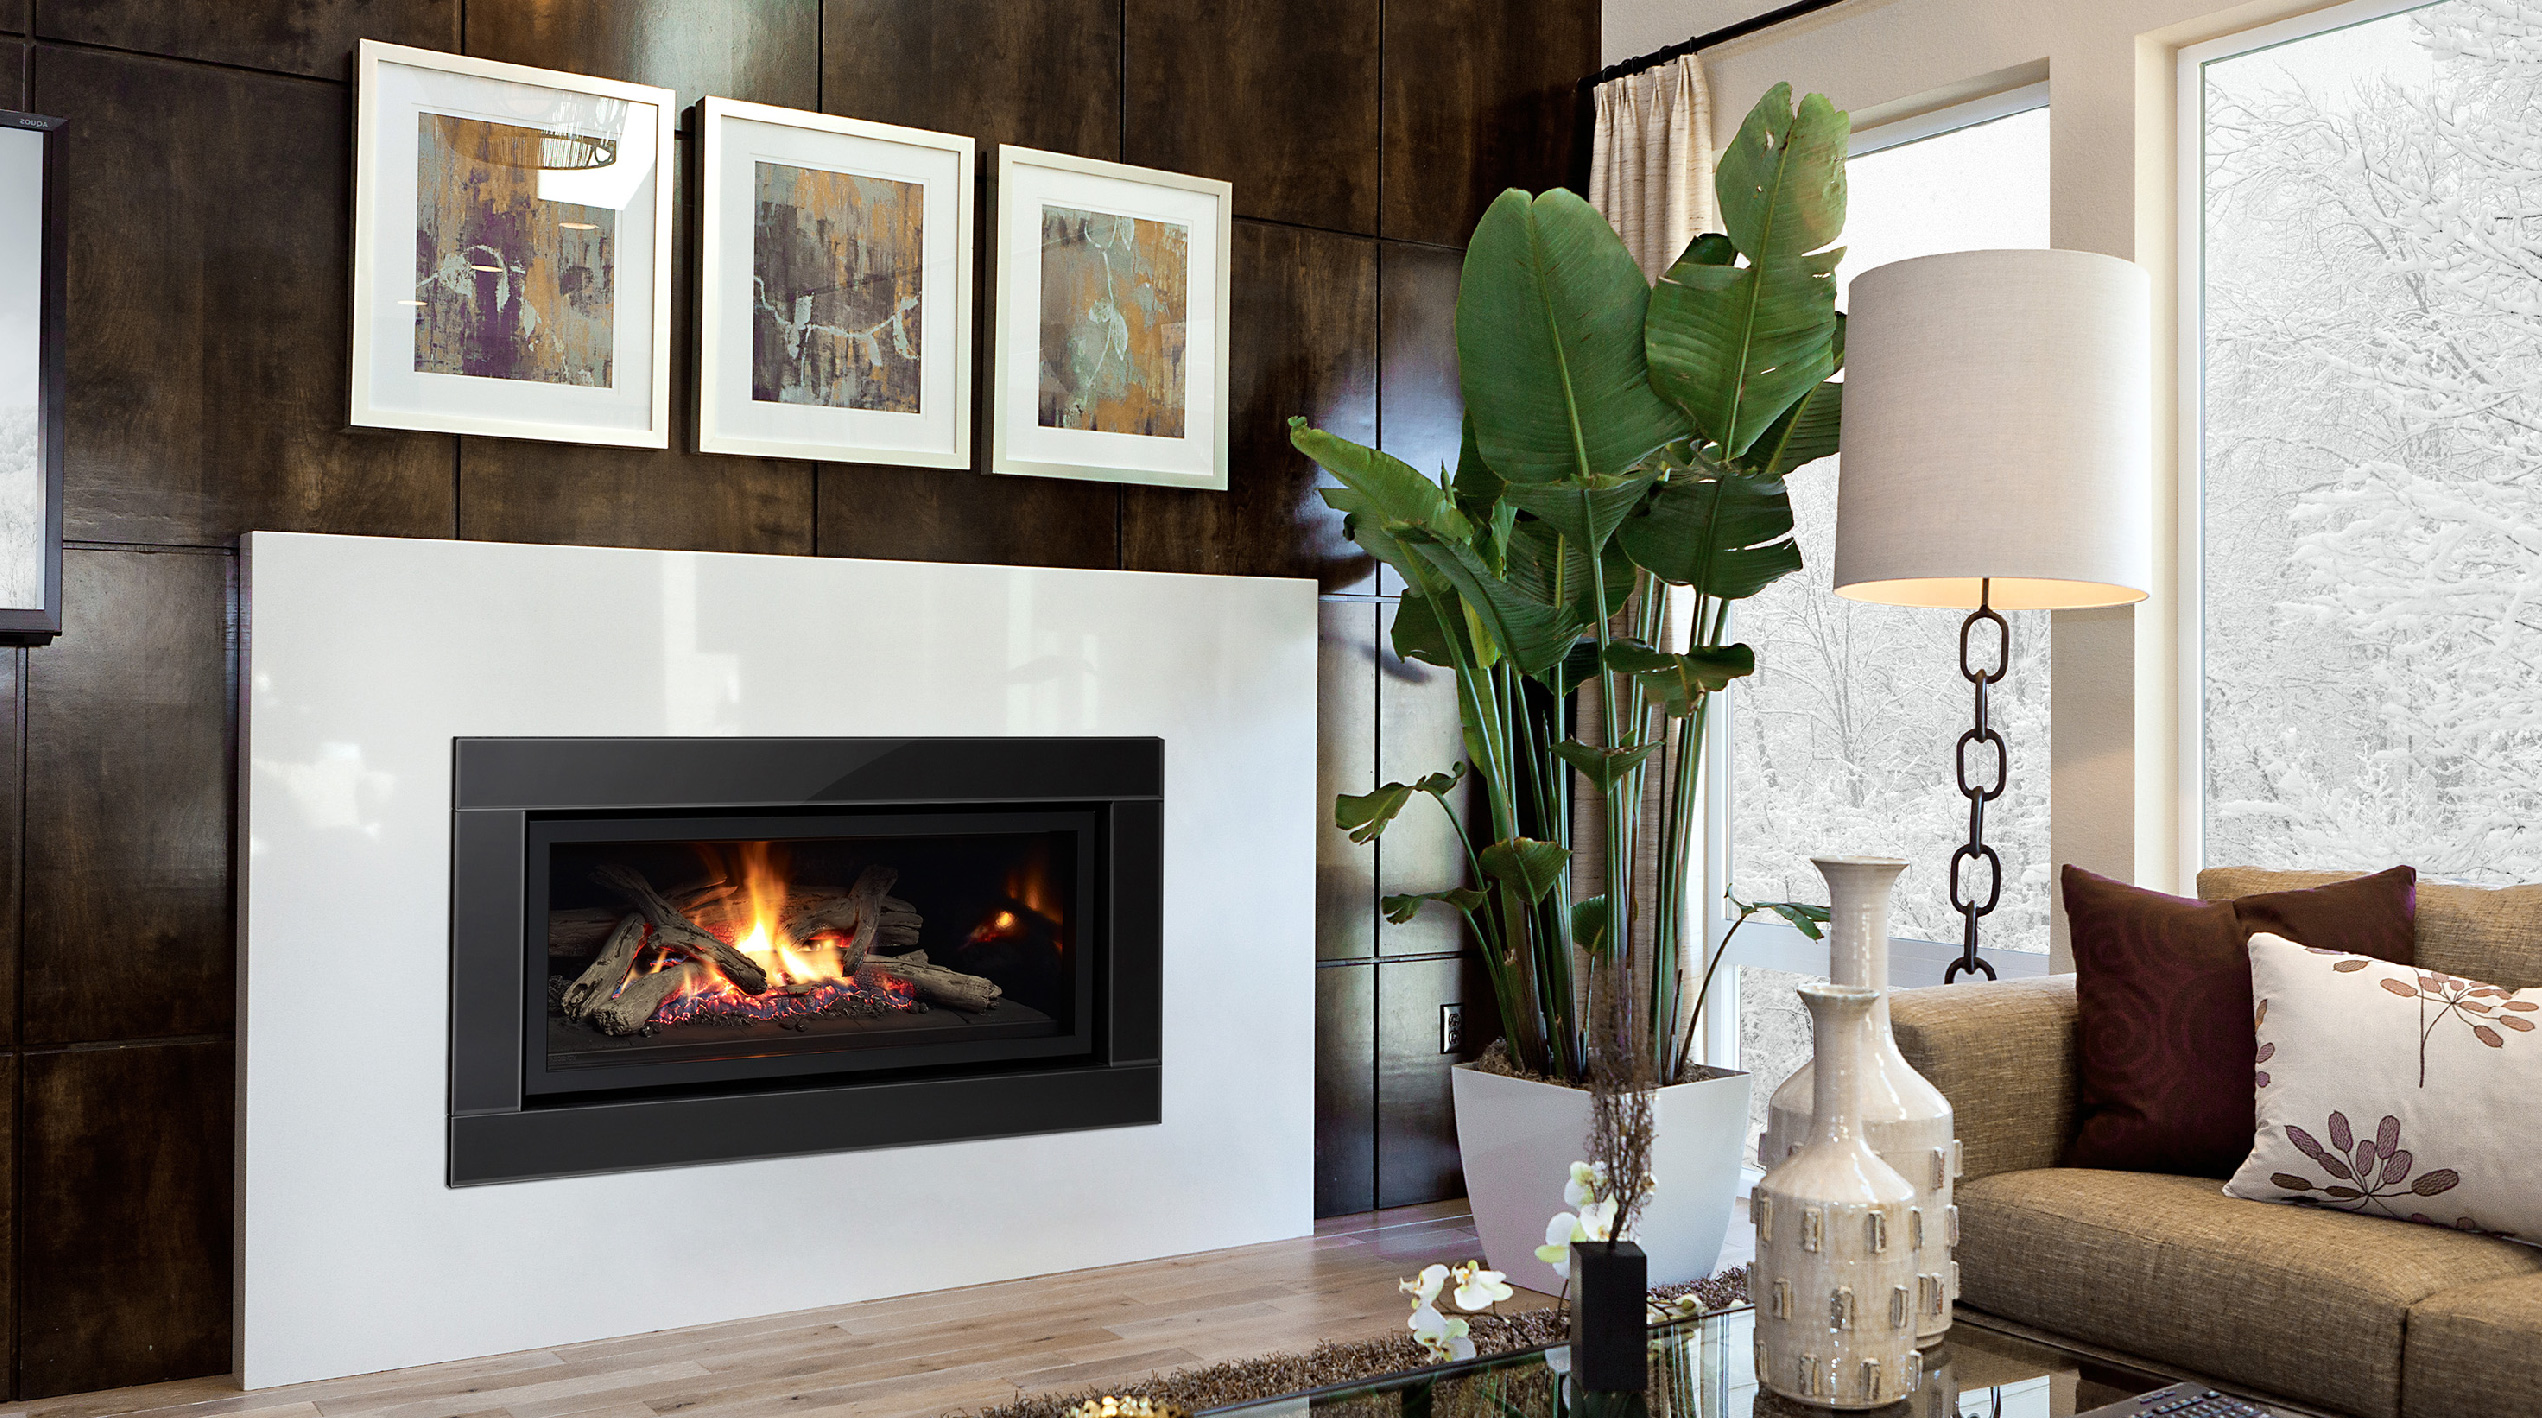 Regency u900 Gas Fireplace Insert with large white tile surround